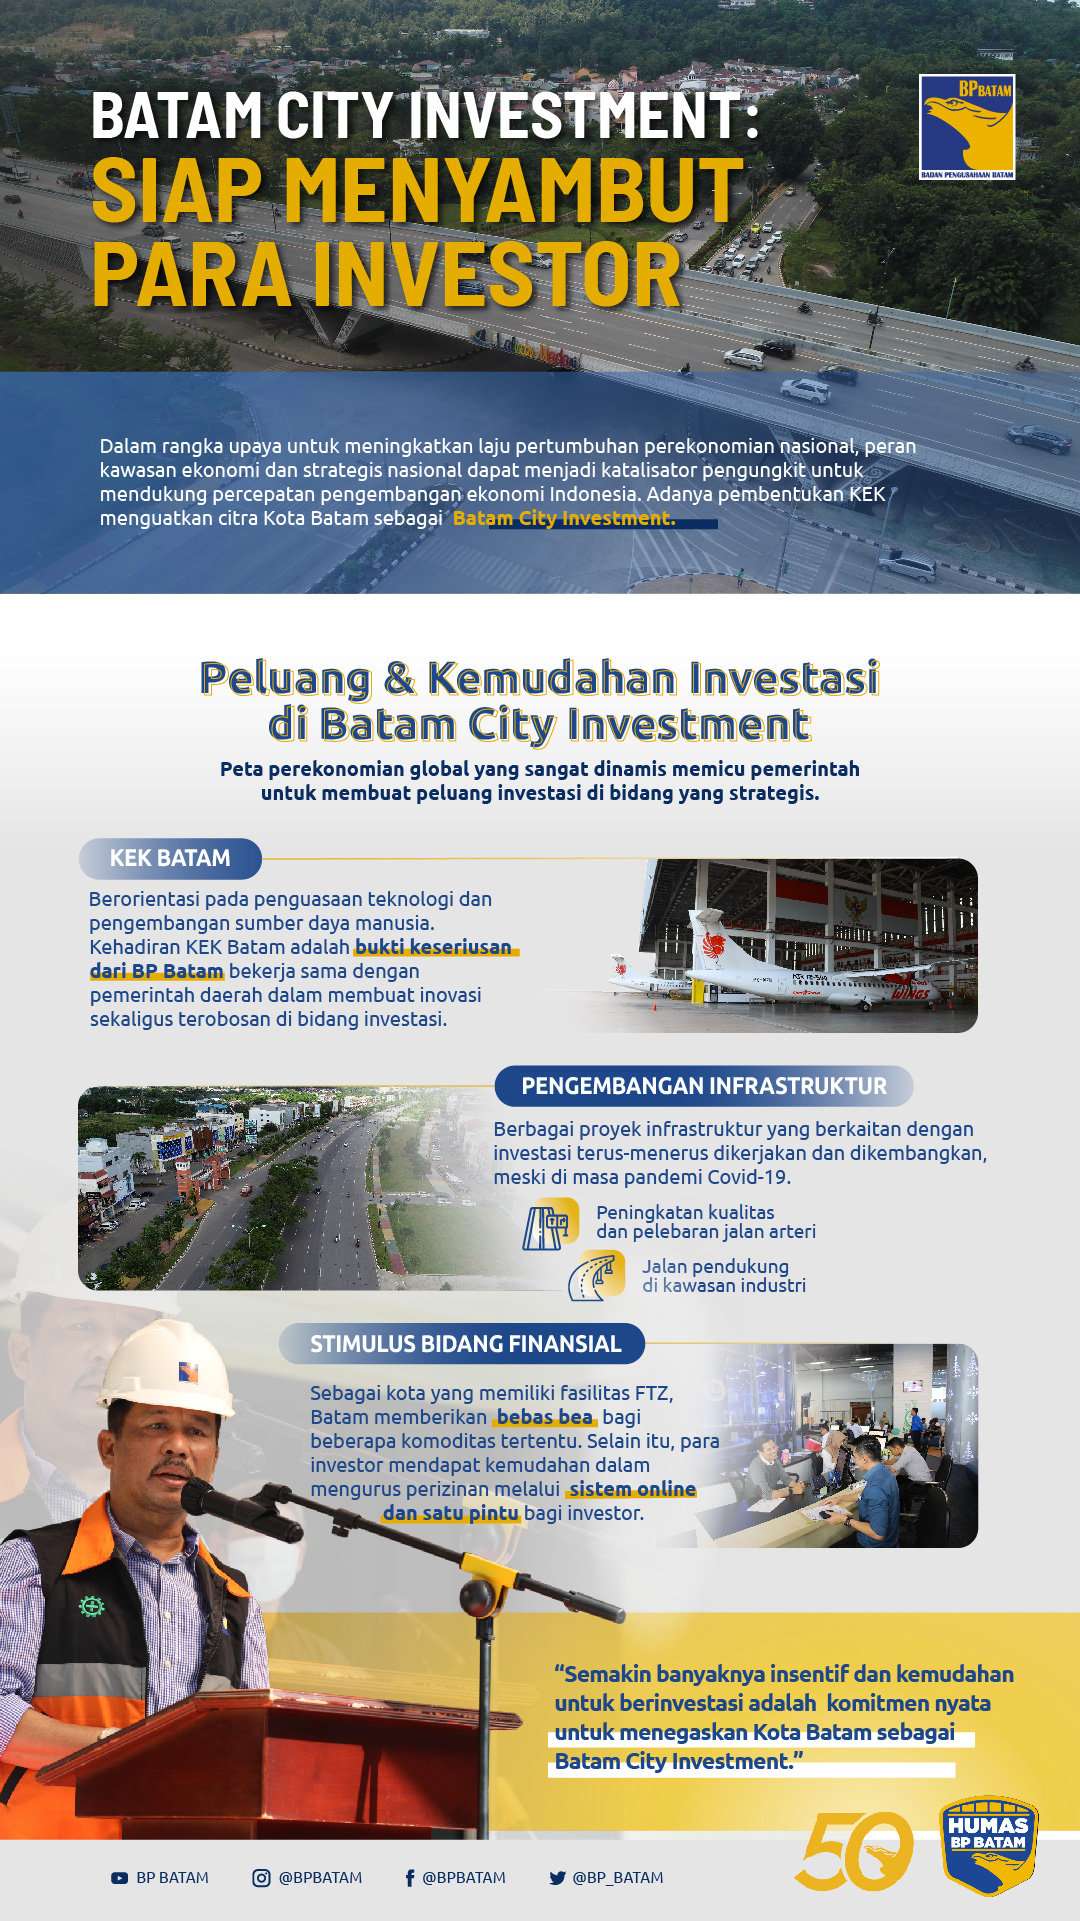 Batam City Investment Siap Menyambut Para Investor